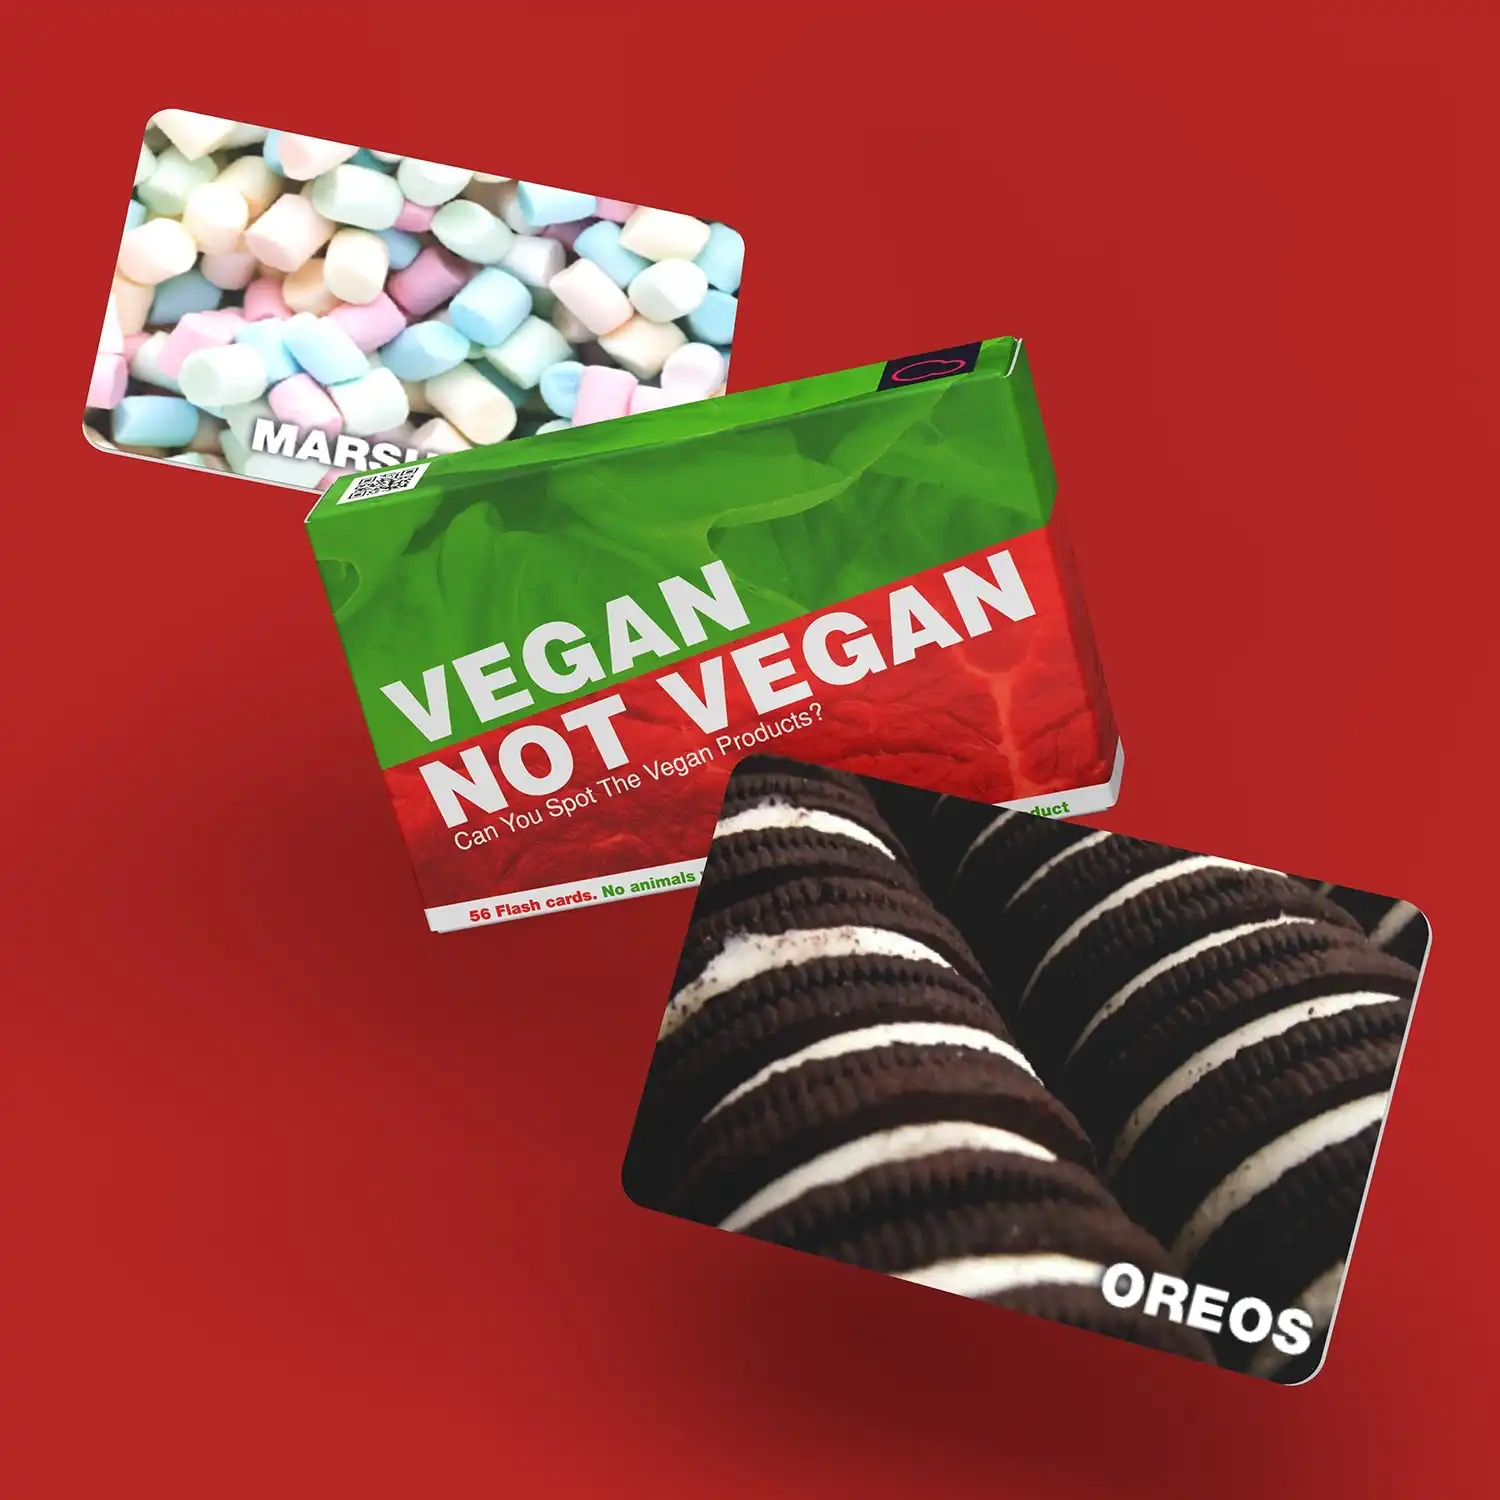 Bubblegum Stuff - Vegan Not Vegan